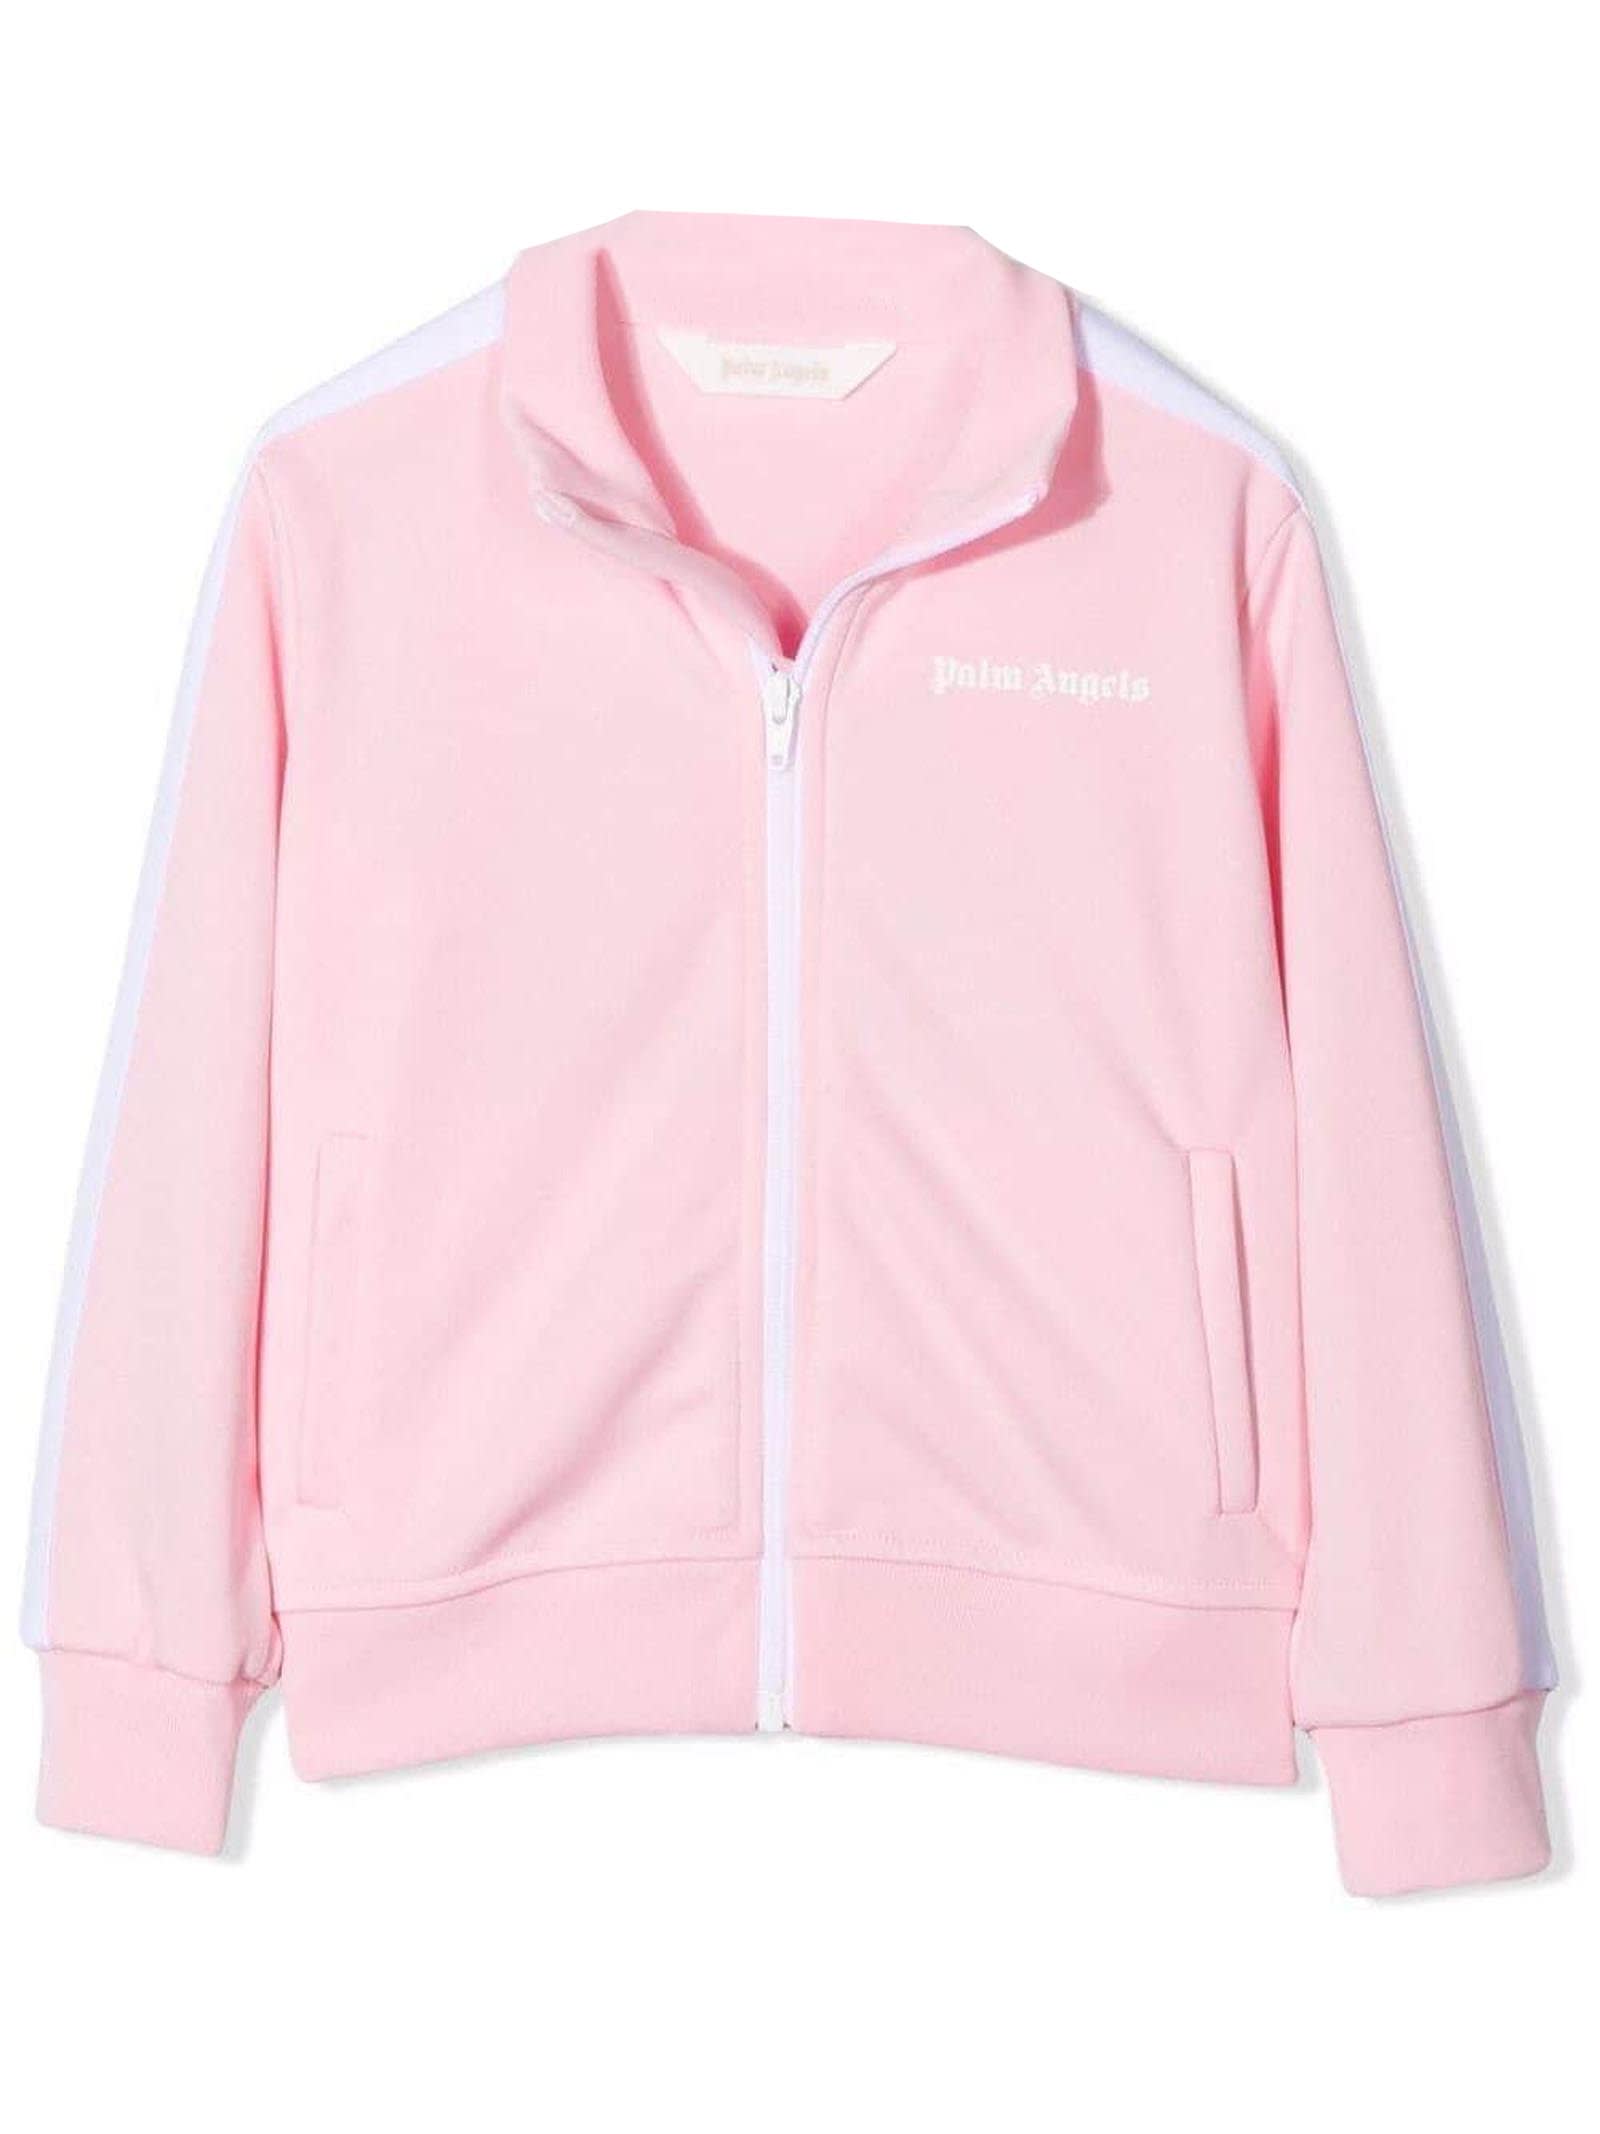 Palm Angels Pink Cotton Sweatshirt